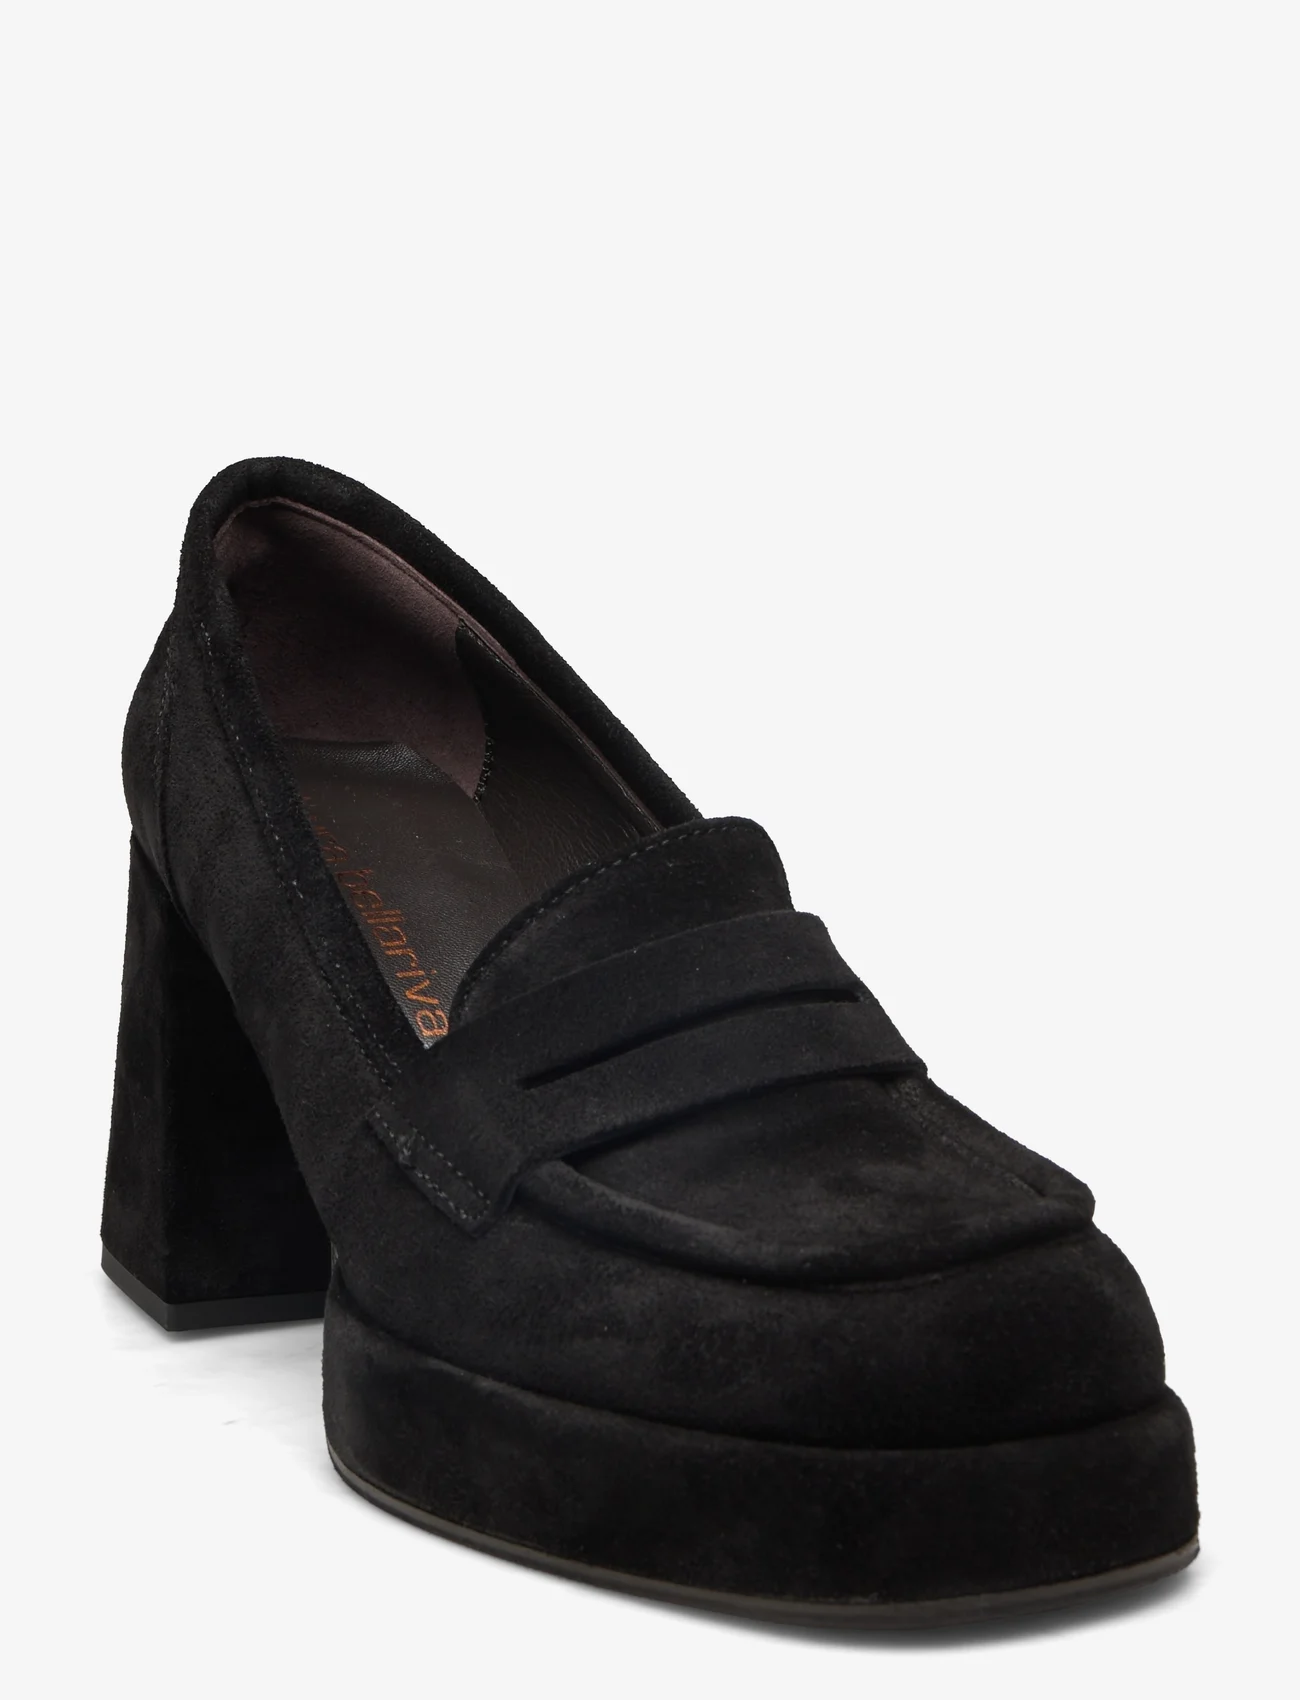 Laura Bellariva - Shoes - mokasinai aukštesniu kulnu - black - 0